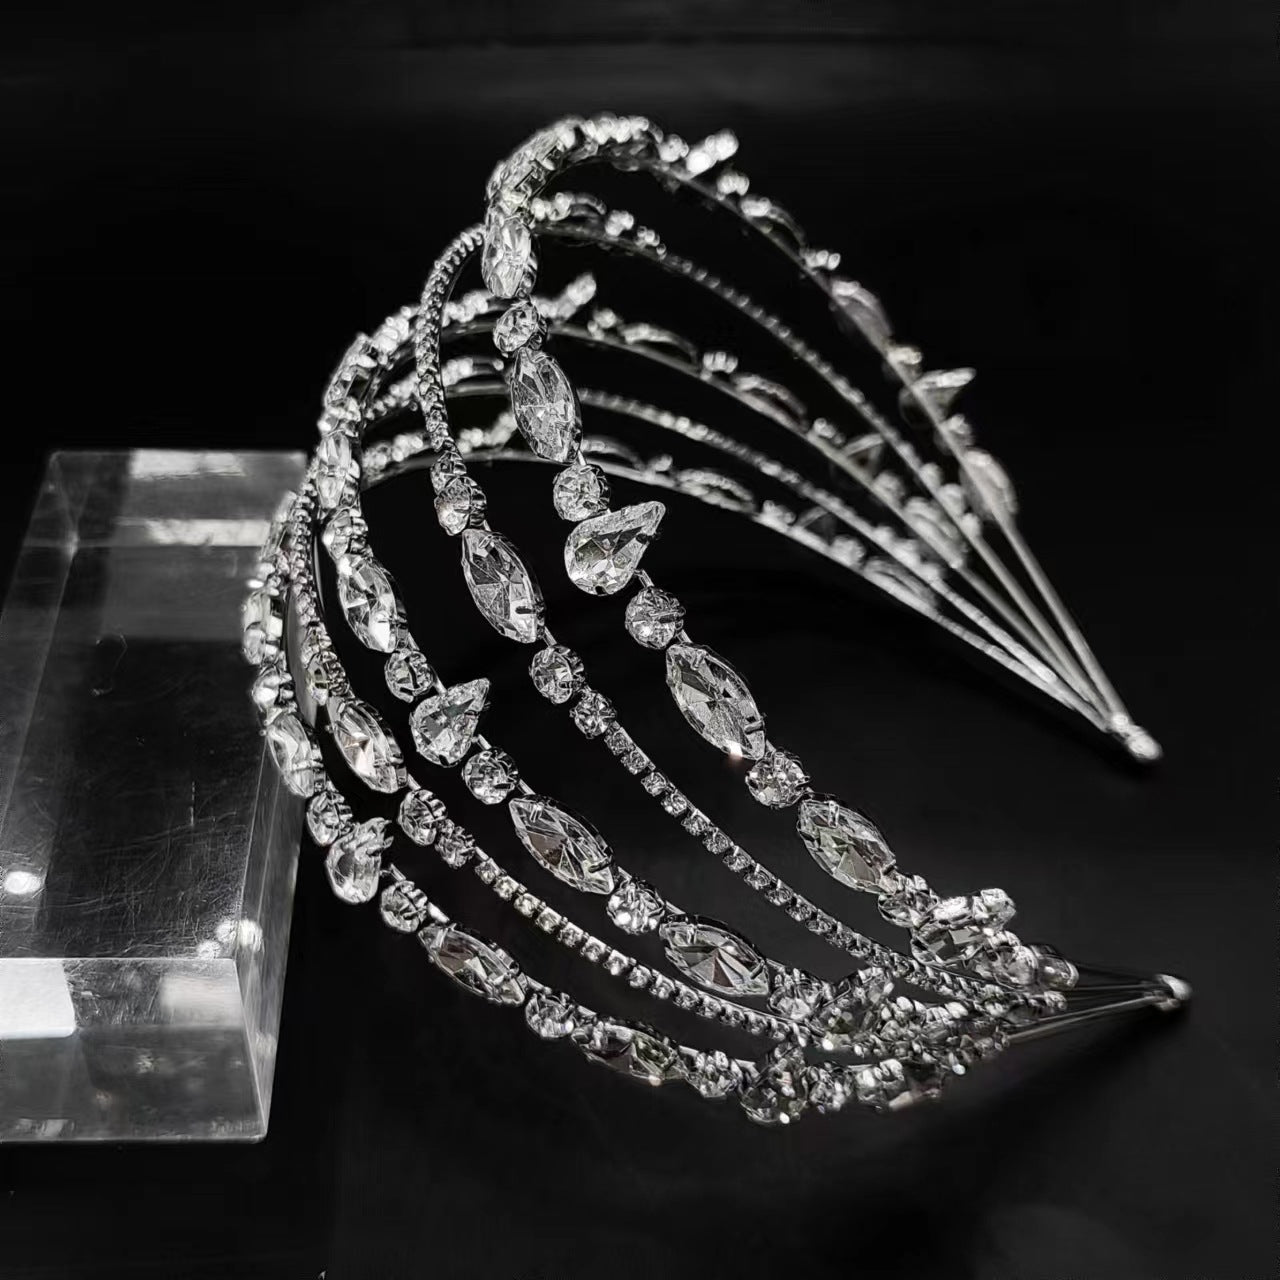 Stunning Multi-layered Crtstal Headband for Bride - SHEFAV